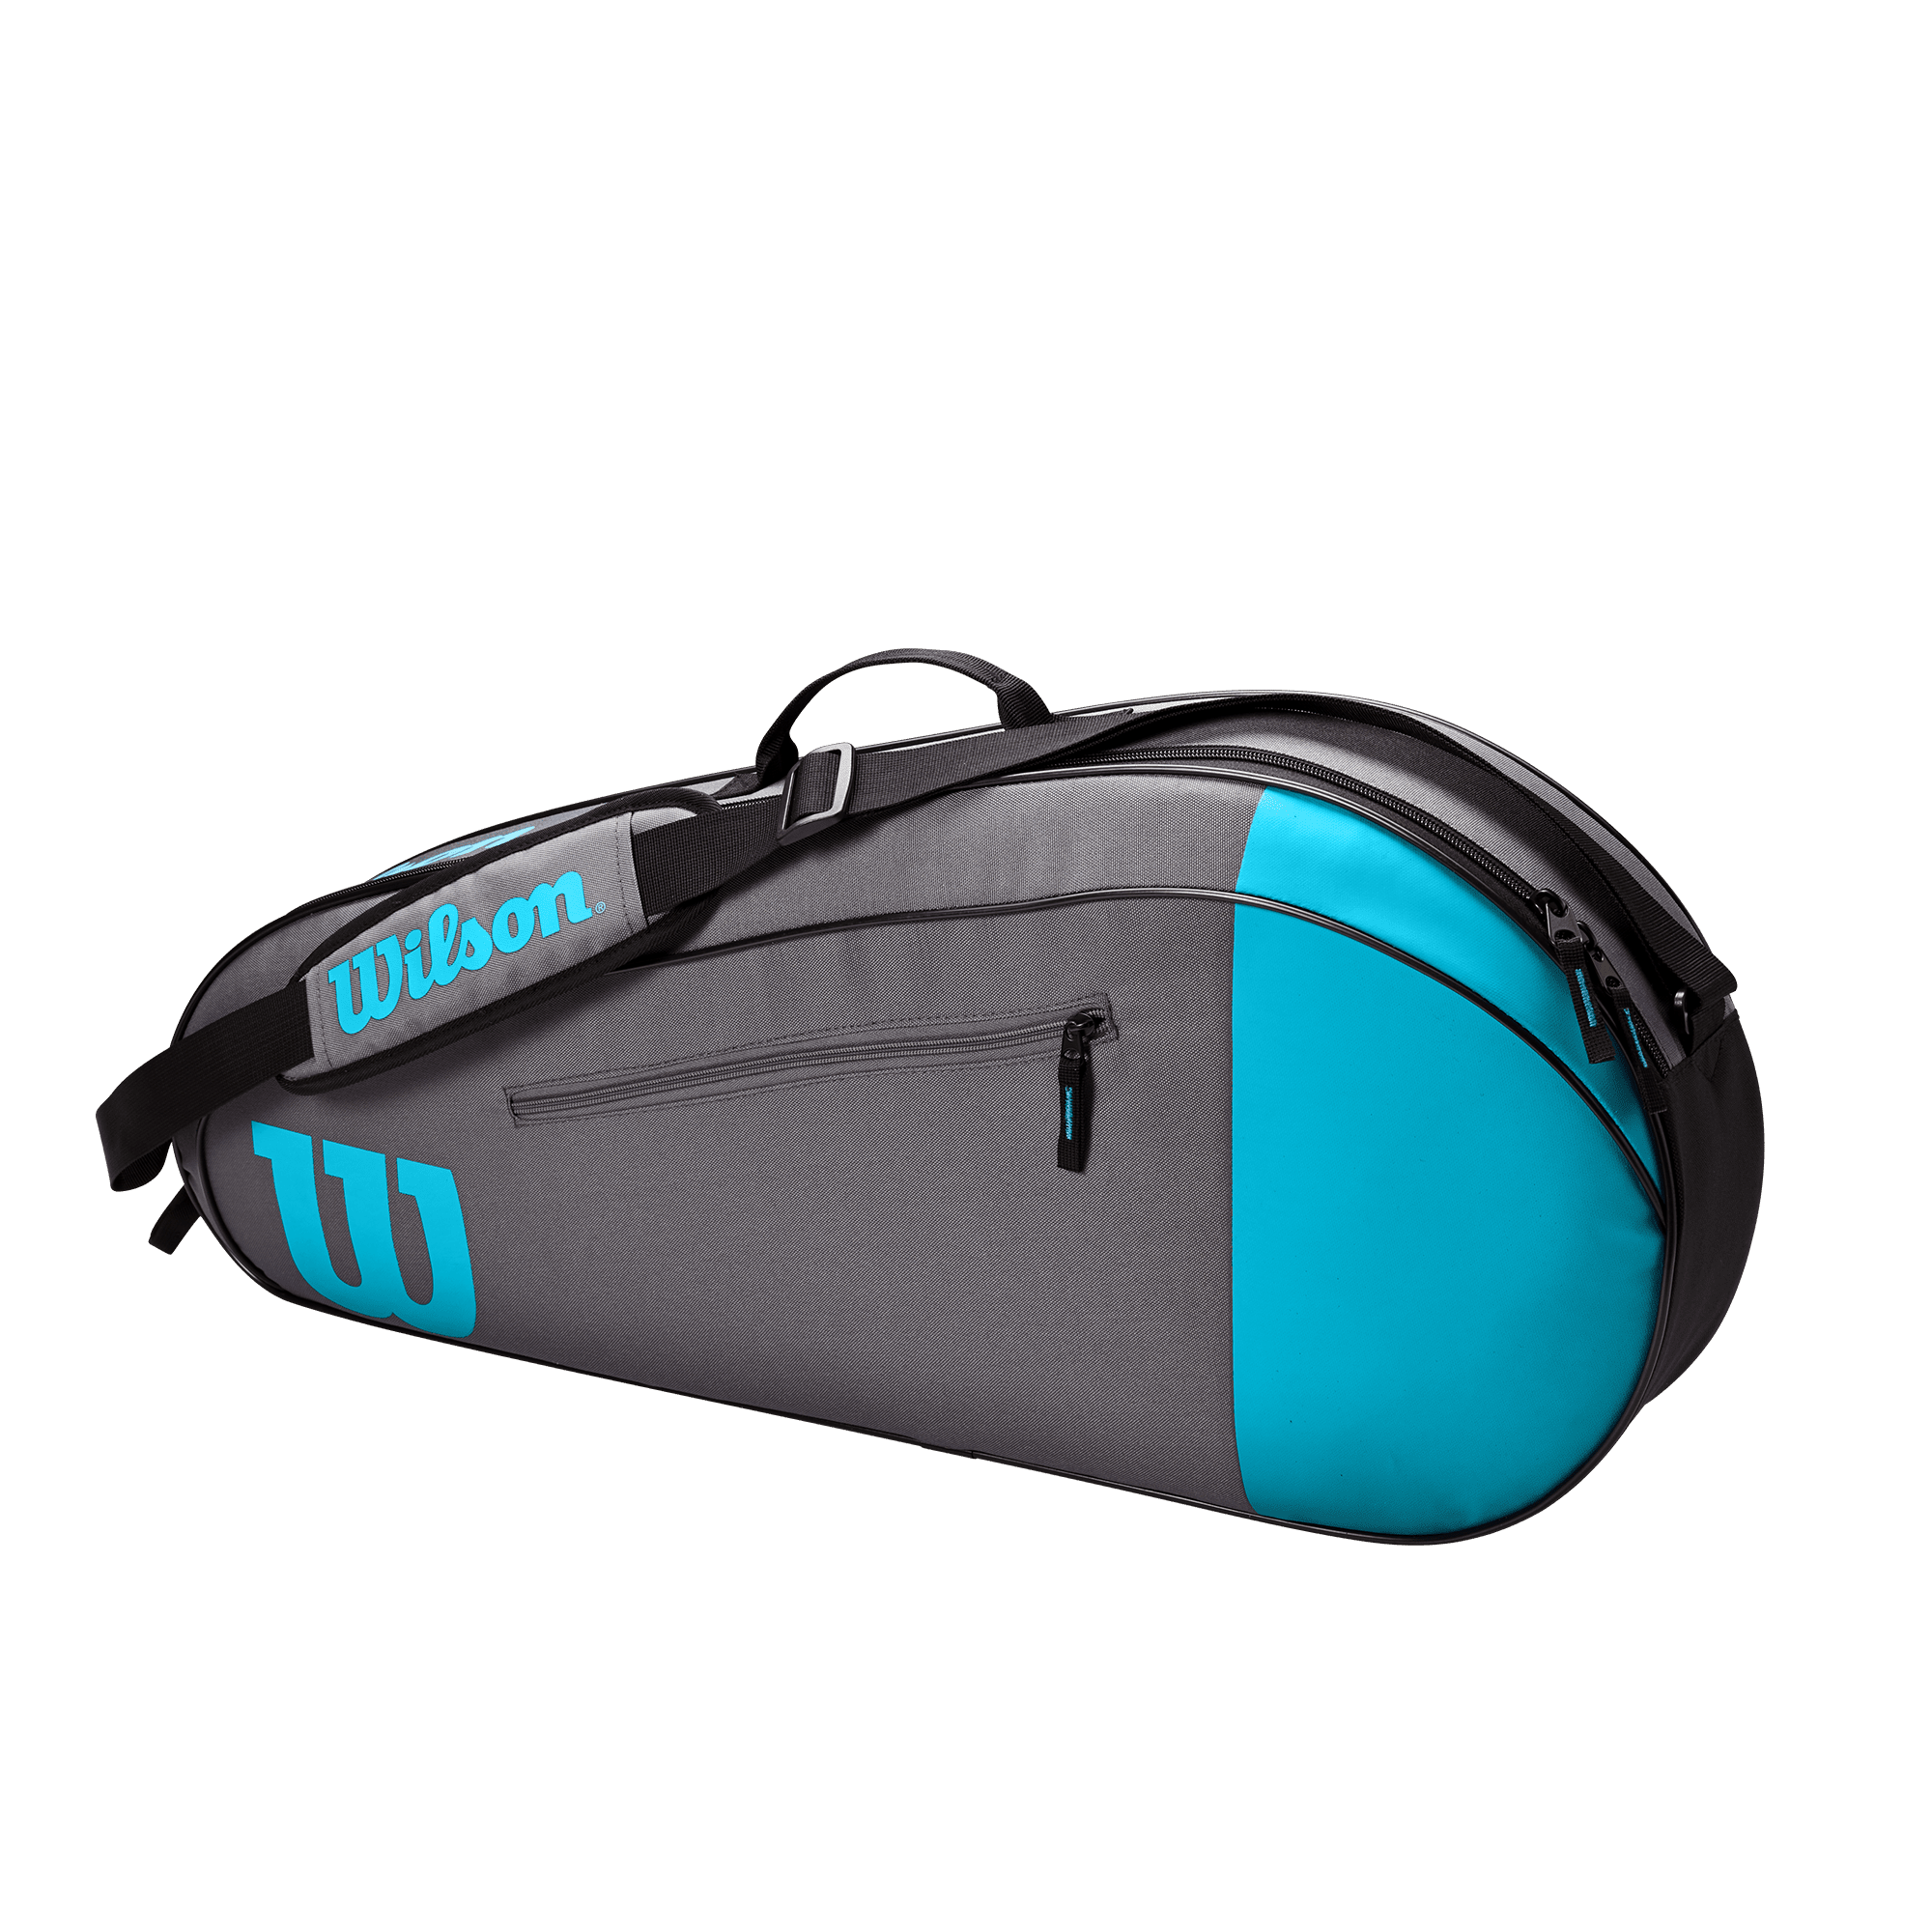 wilson tennis bag